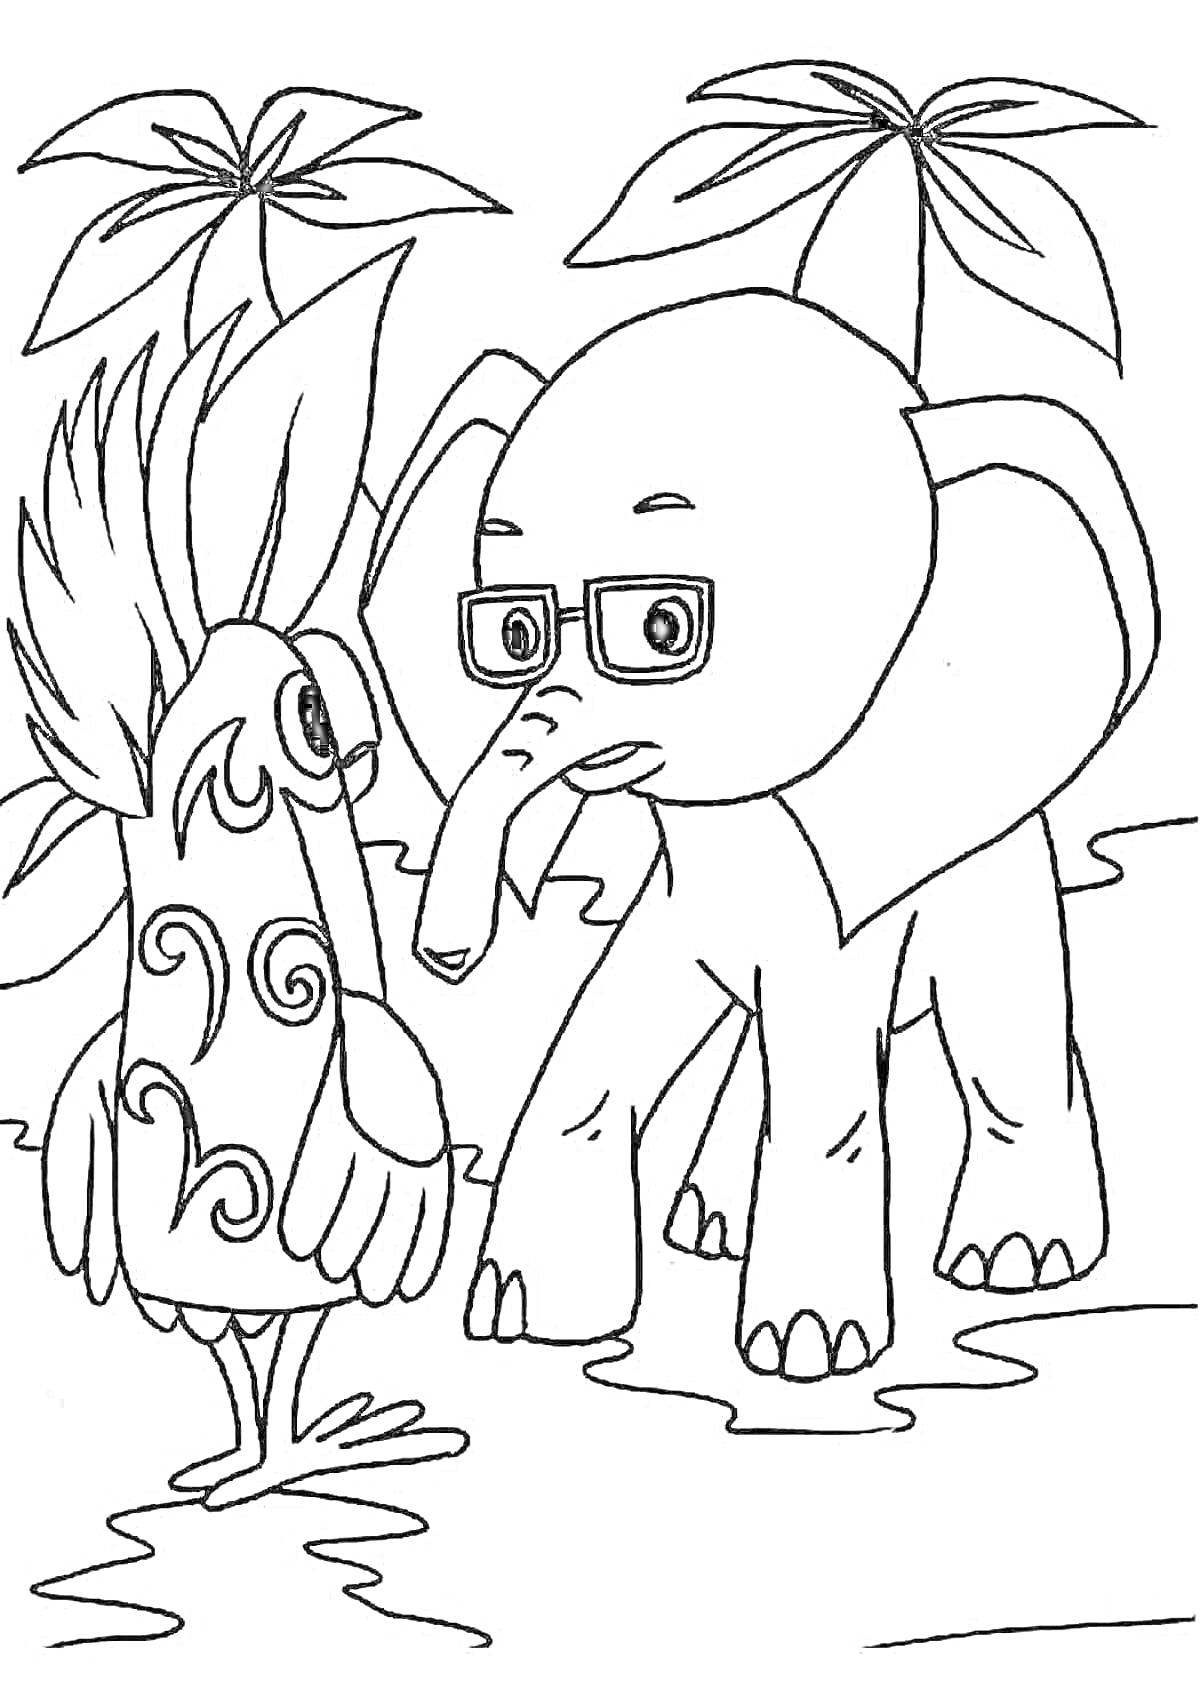 Раскраска Птичка с узорами и слон в очках на фоне пальм